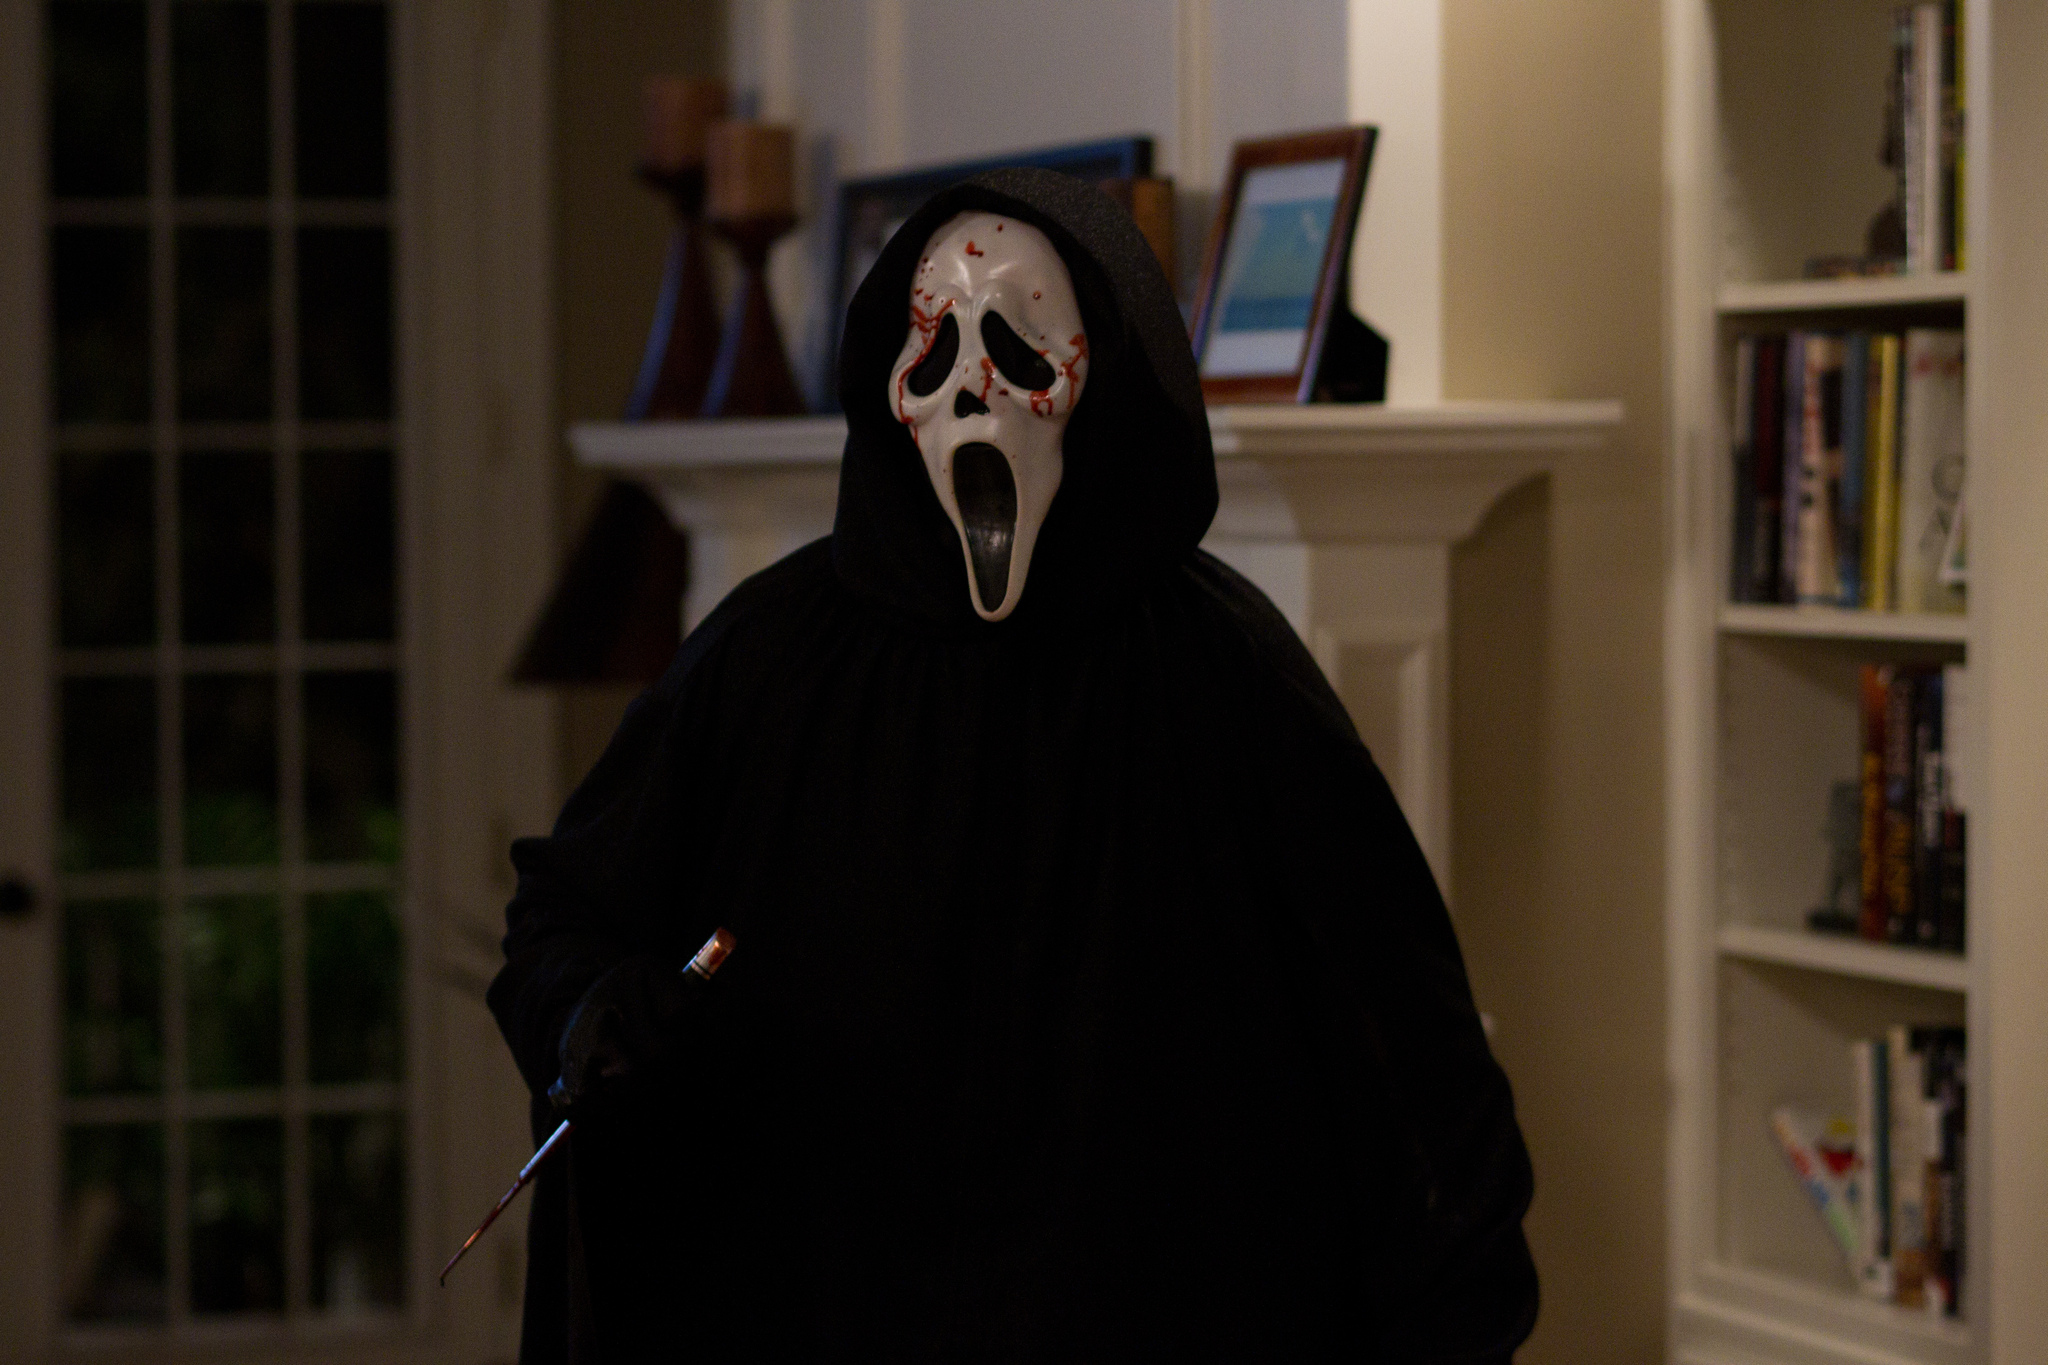 Scream 4 / Scream 4 (2011)